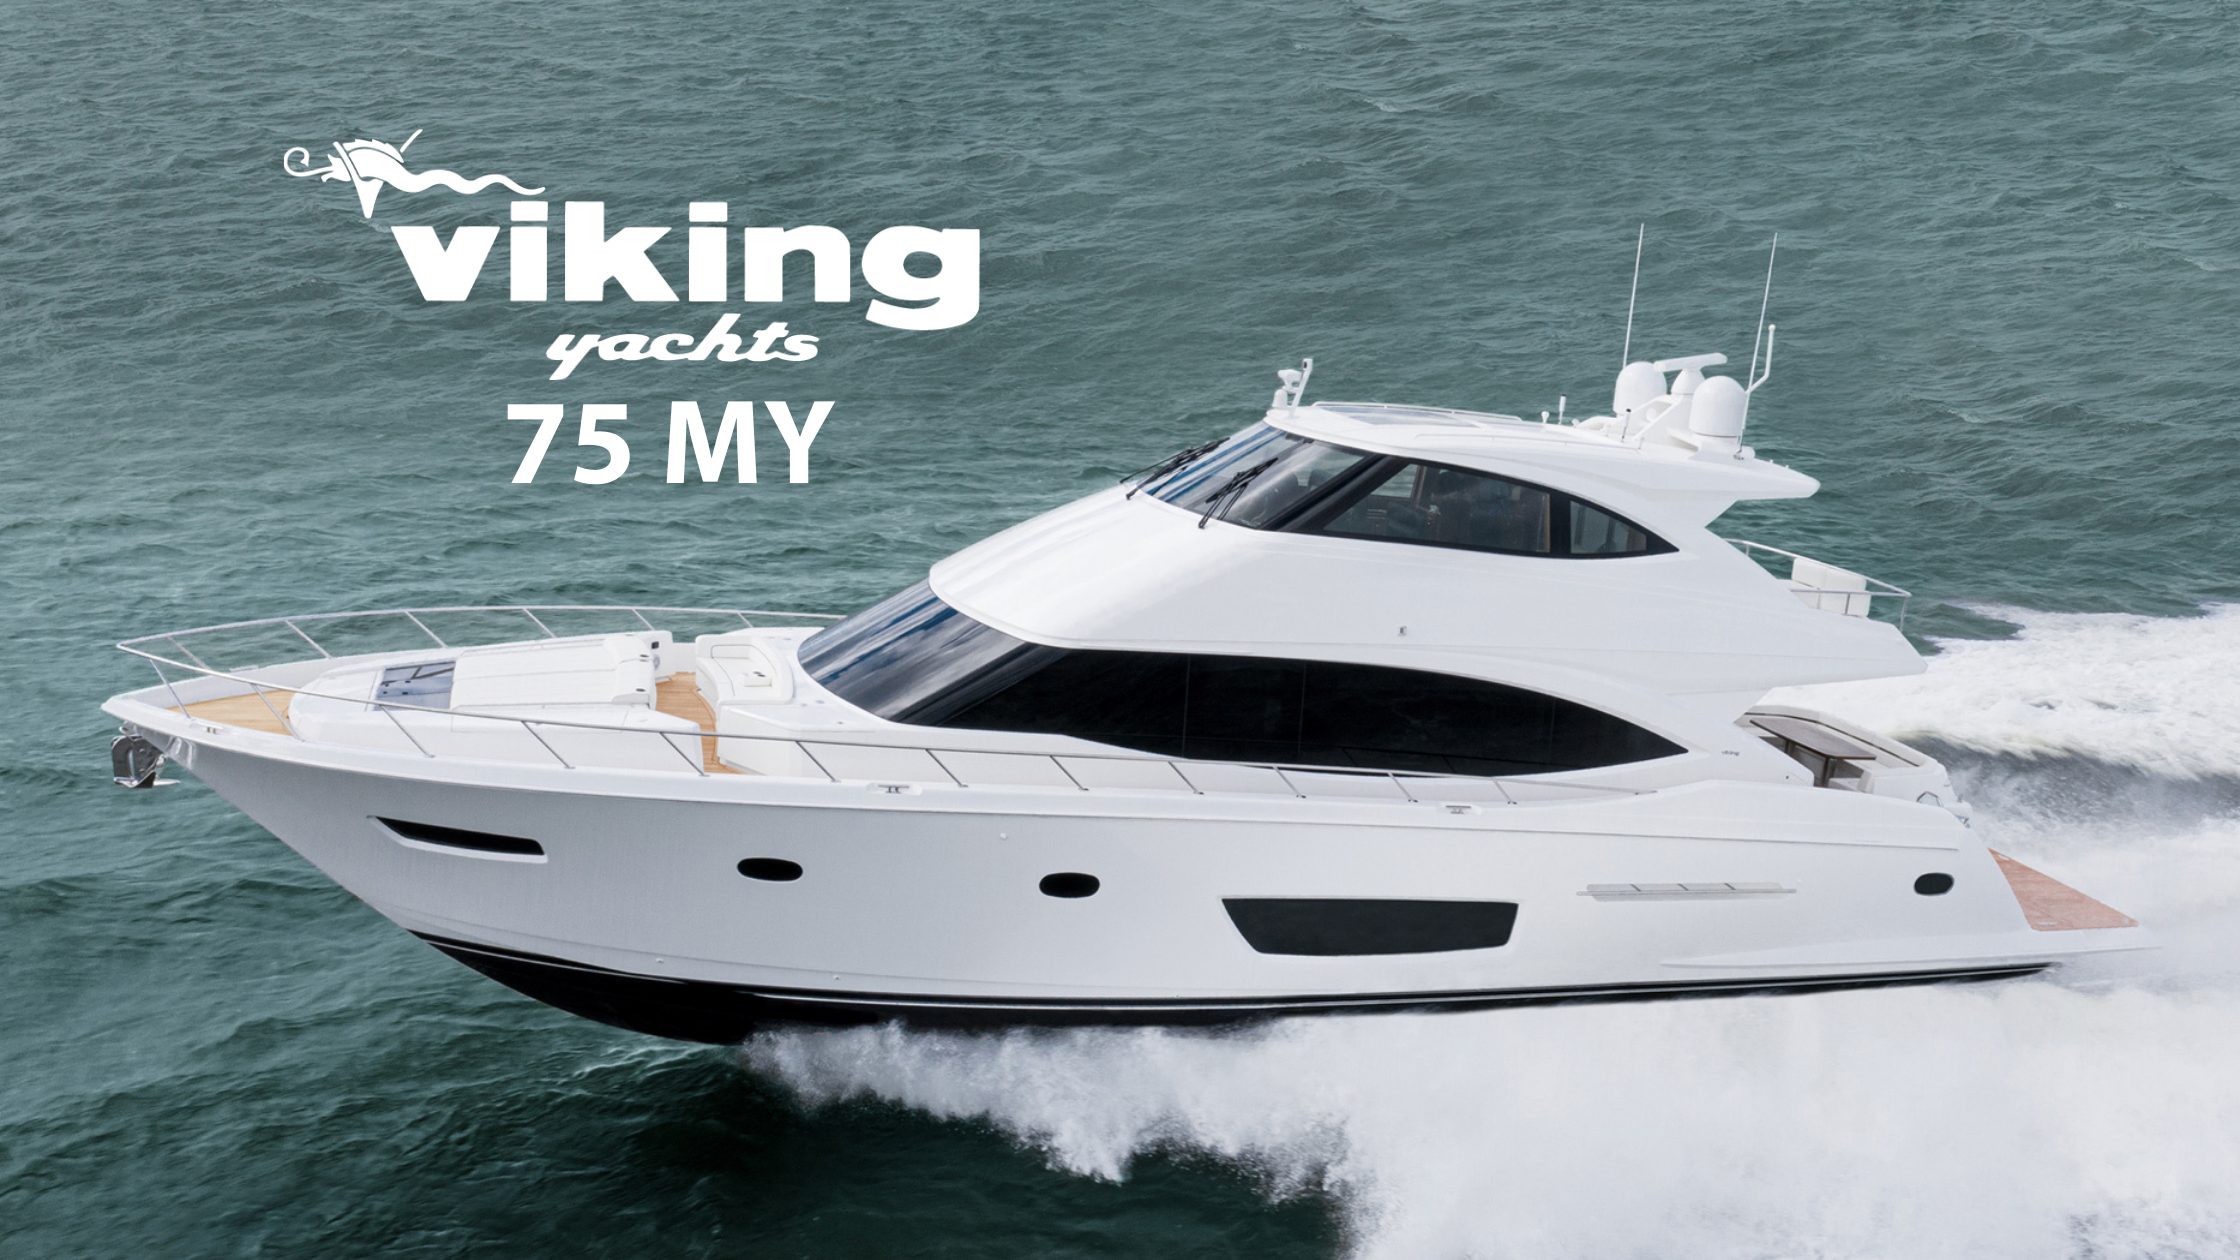 The Viking 75 Motor Yacht